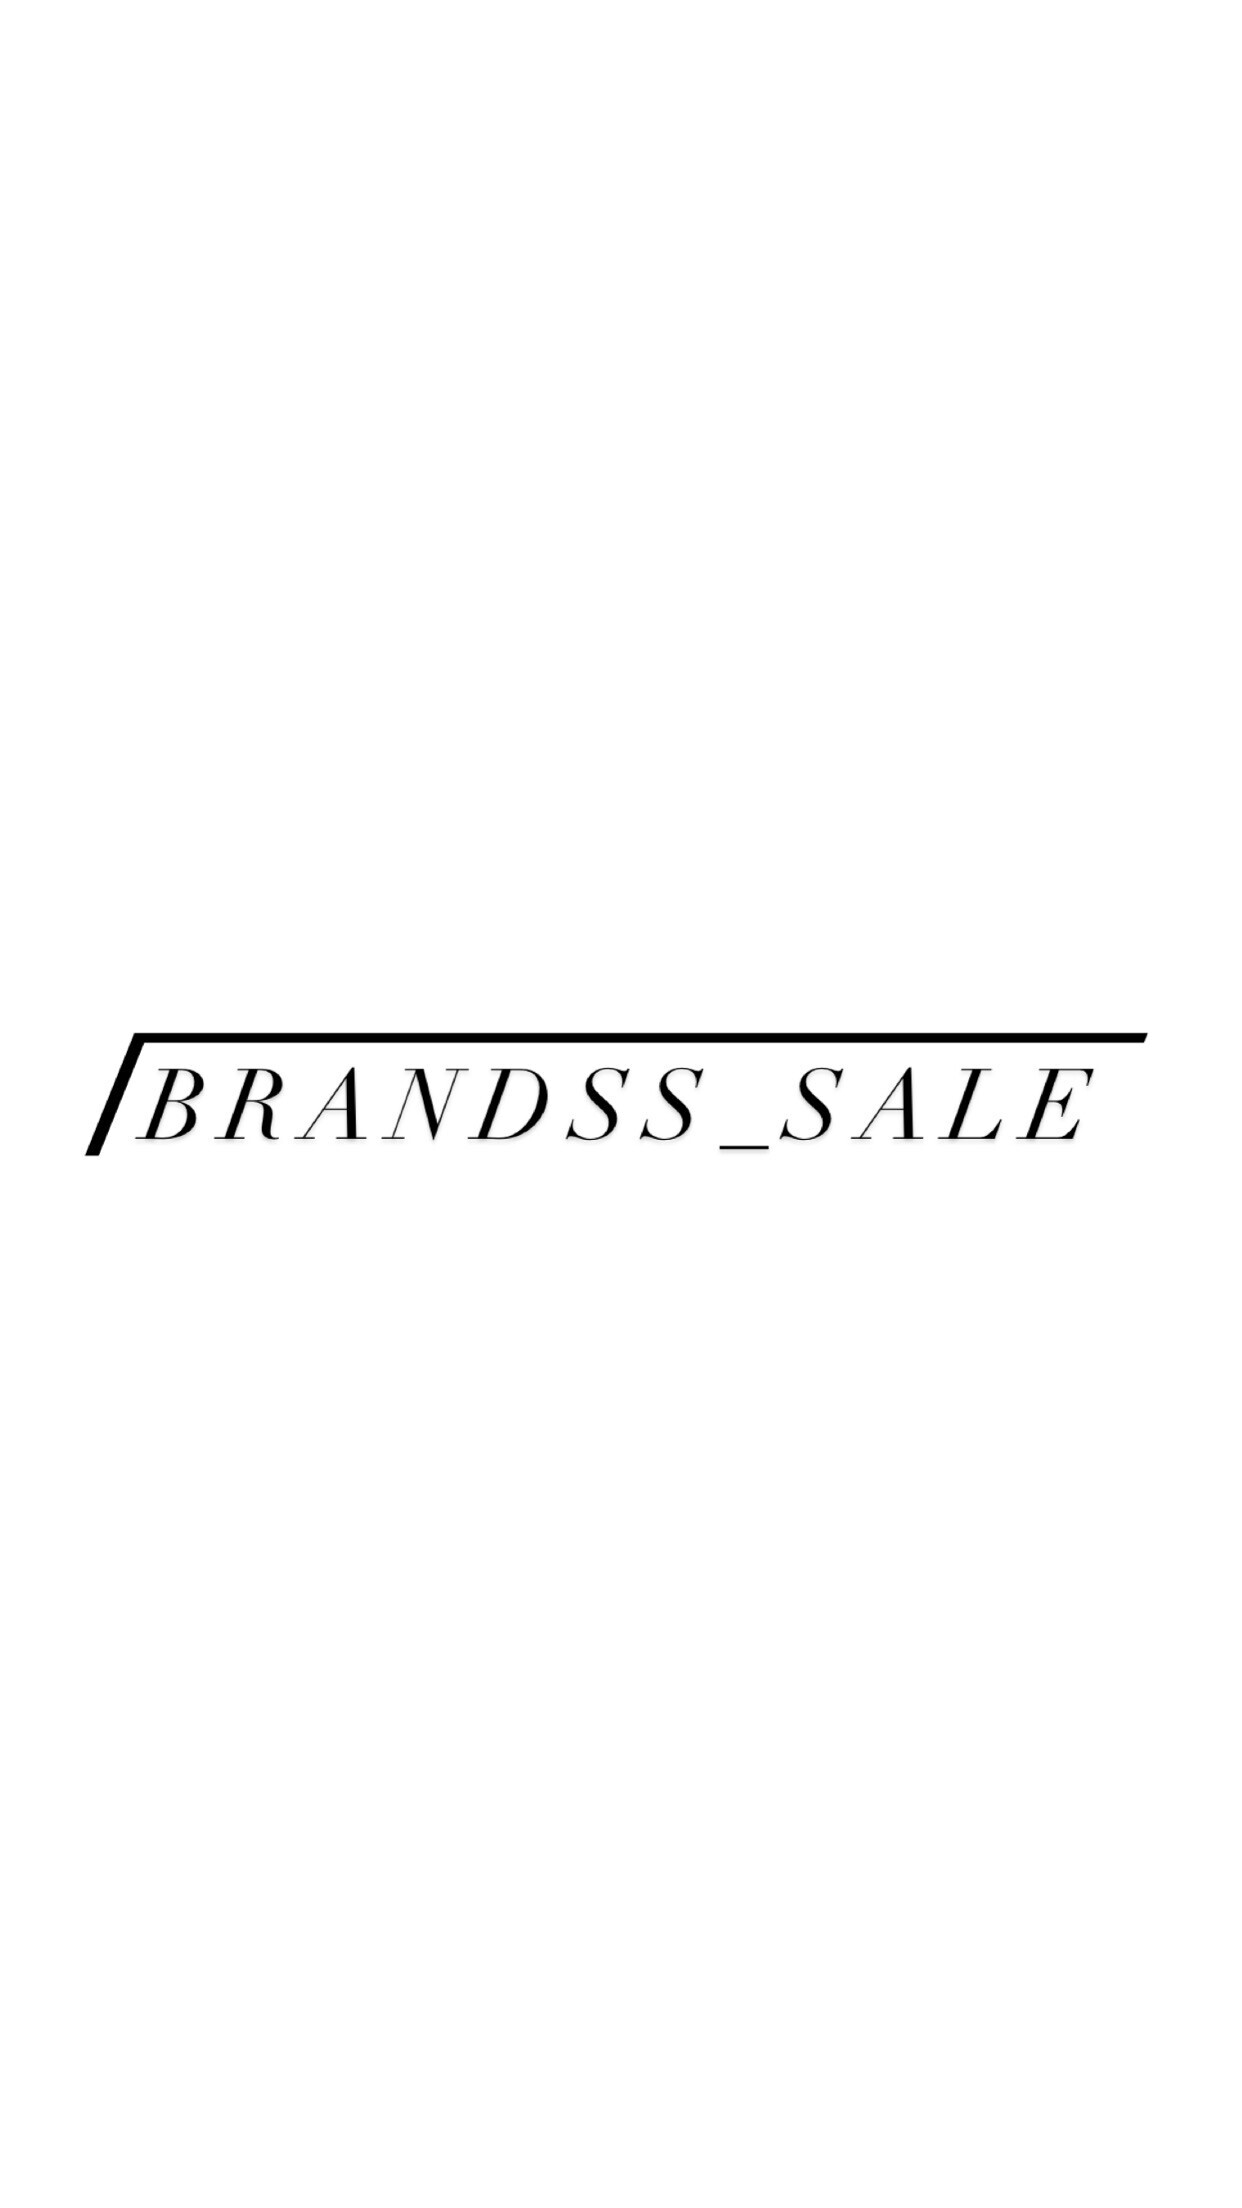 Brandss_sale ➤ Кыргызстан ᐉ lalafo.kg-да компаниянын Бизнес-профили